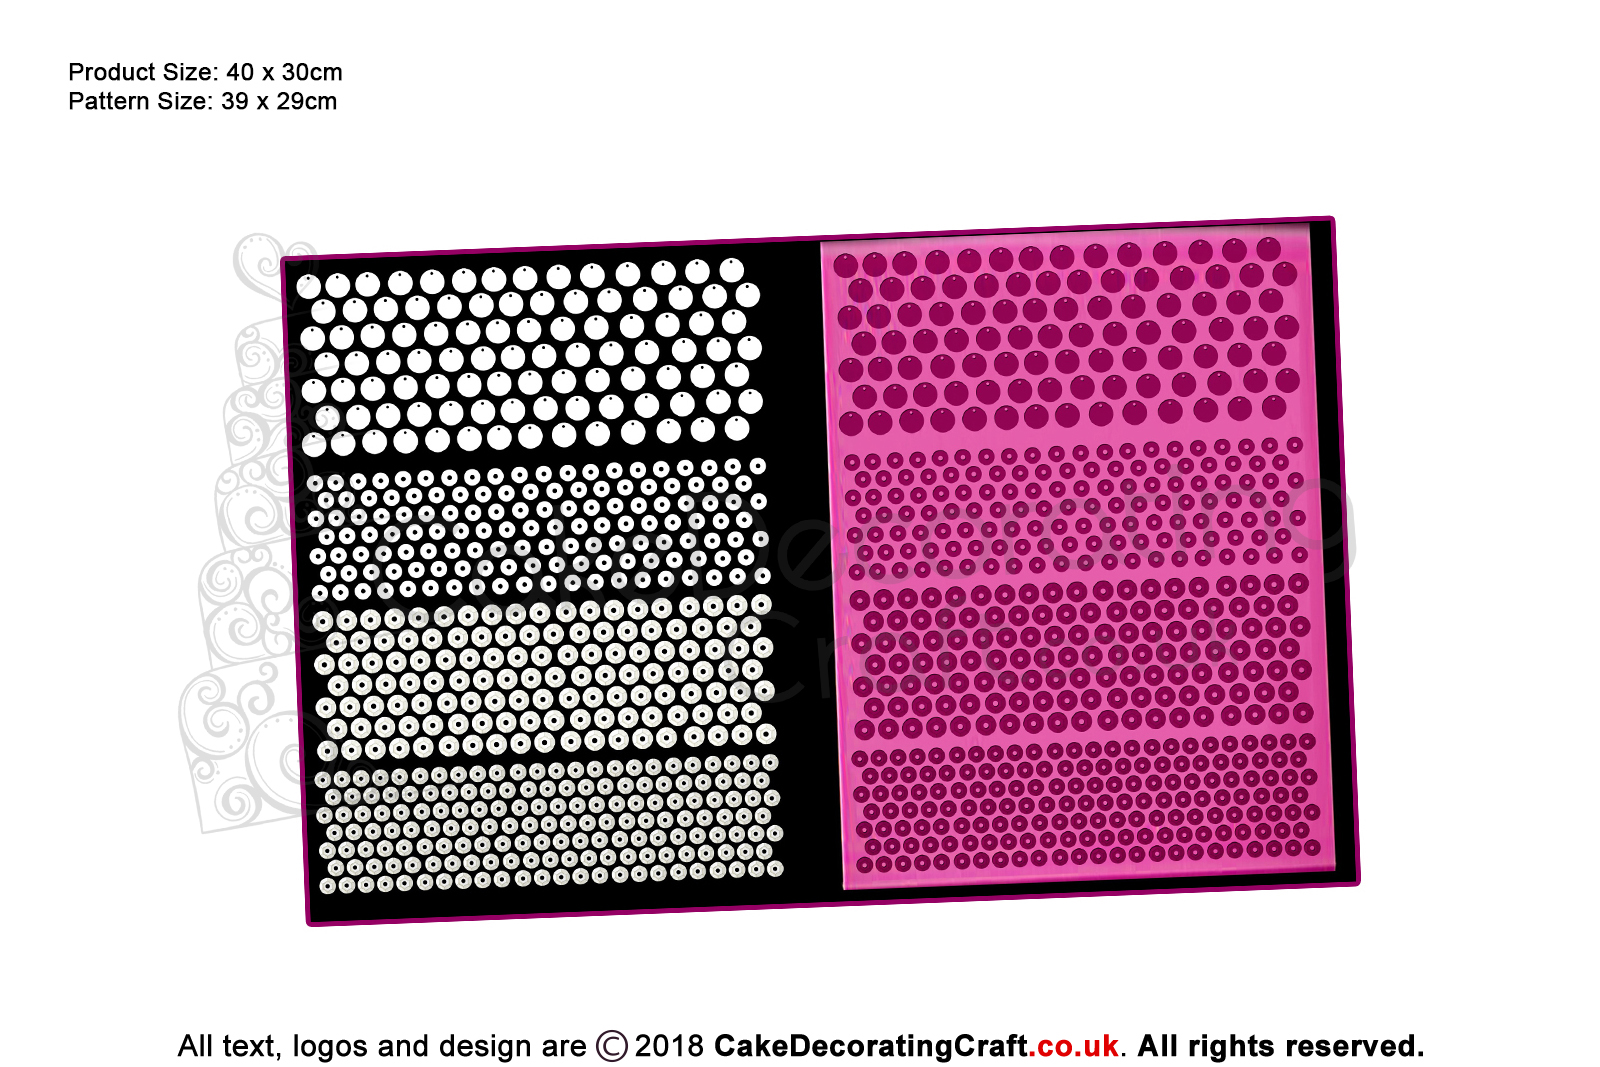 3D Sequin | Cake Lace Mats for Edible Cake Lace Mixes and Premixes | Cake Decorating Craft Tool